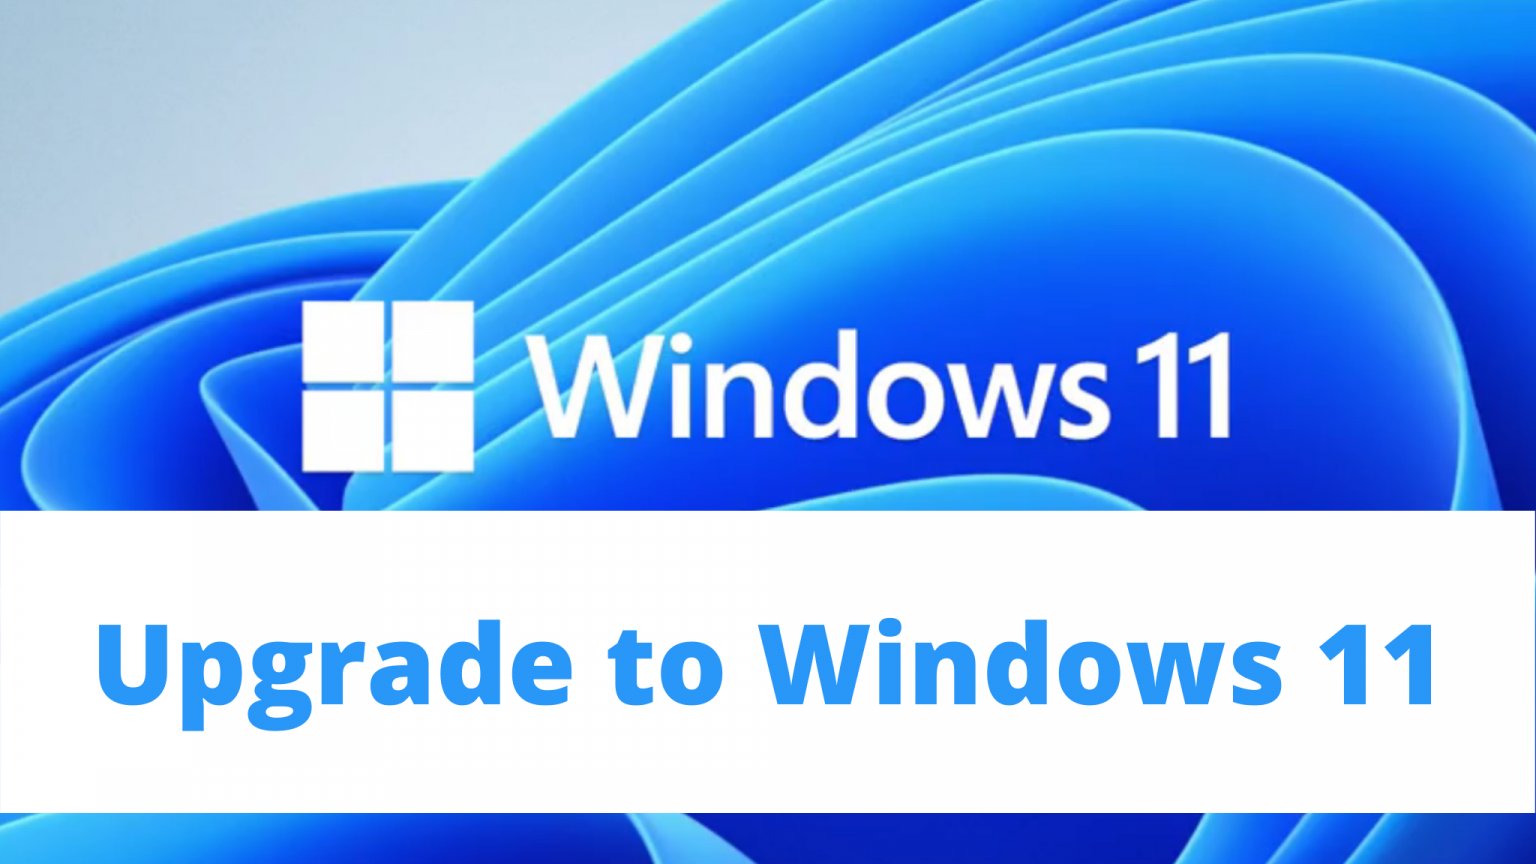 microsoft free upgrade to windows 11